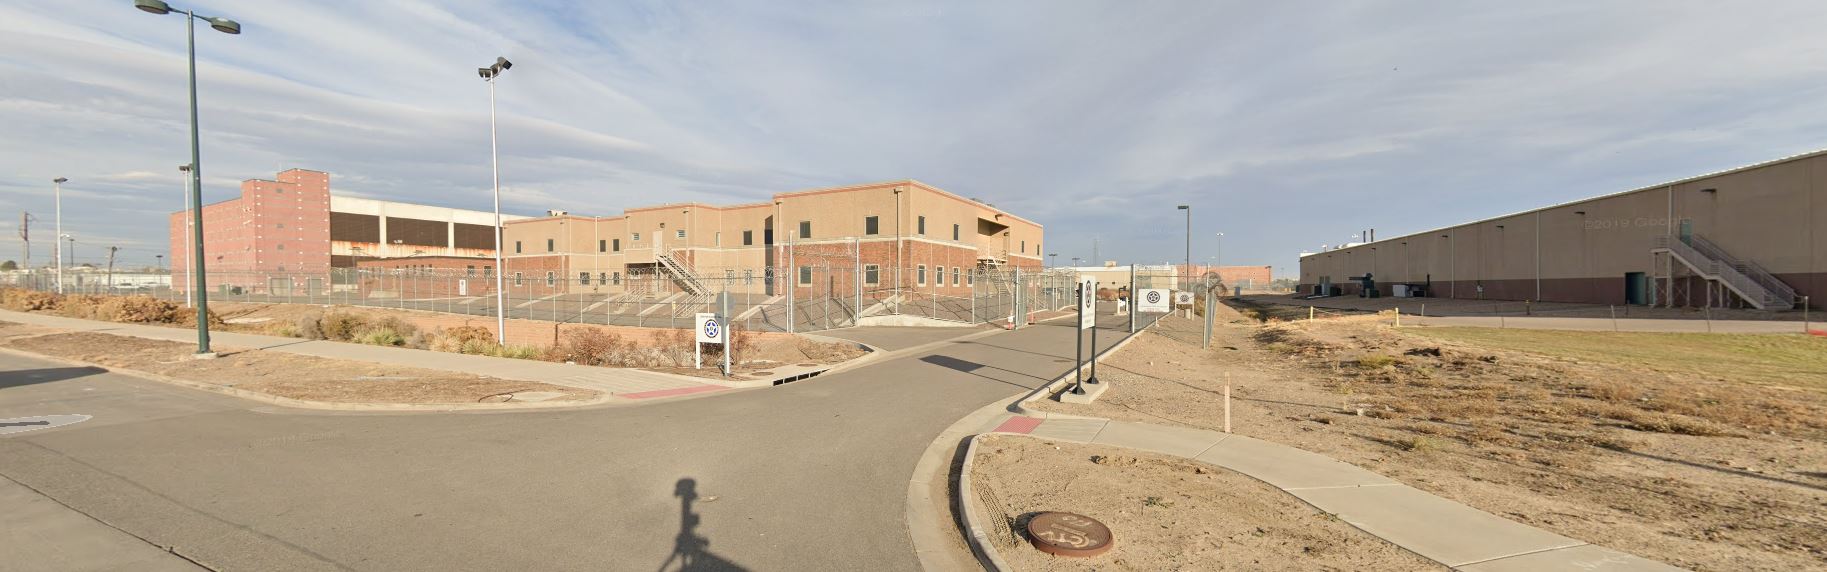 Photos Denver County Jail 3